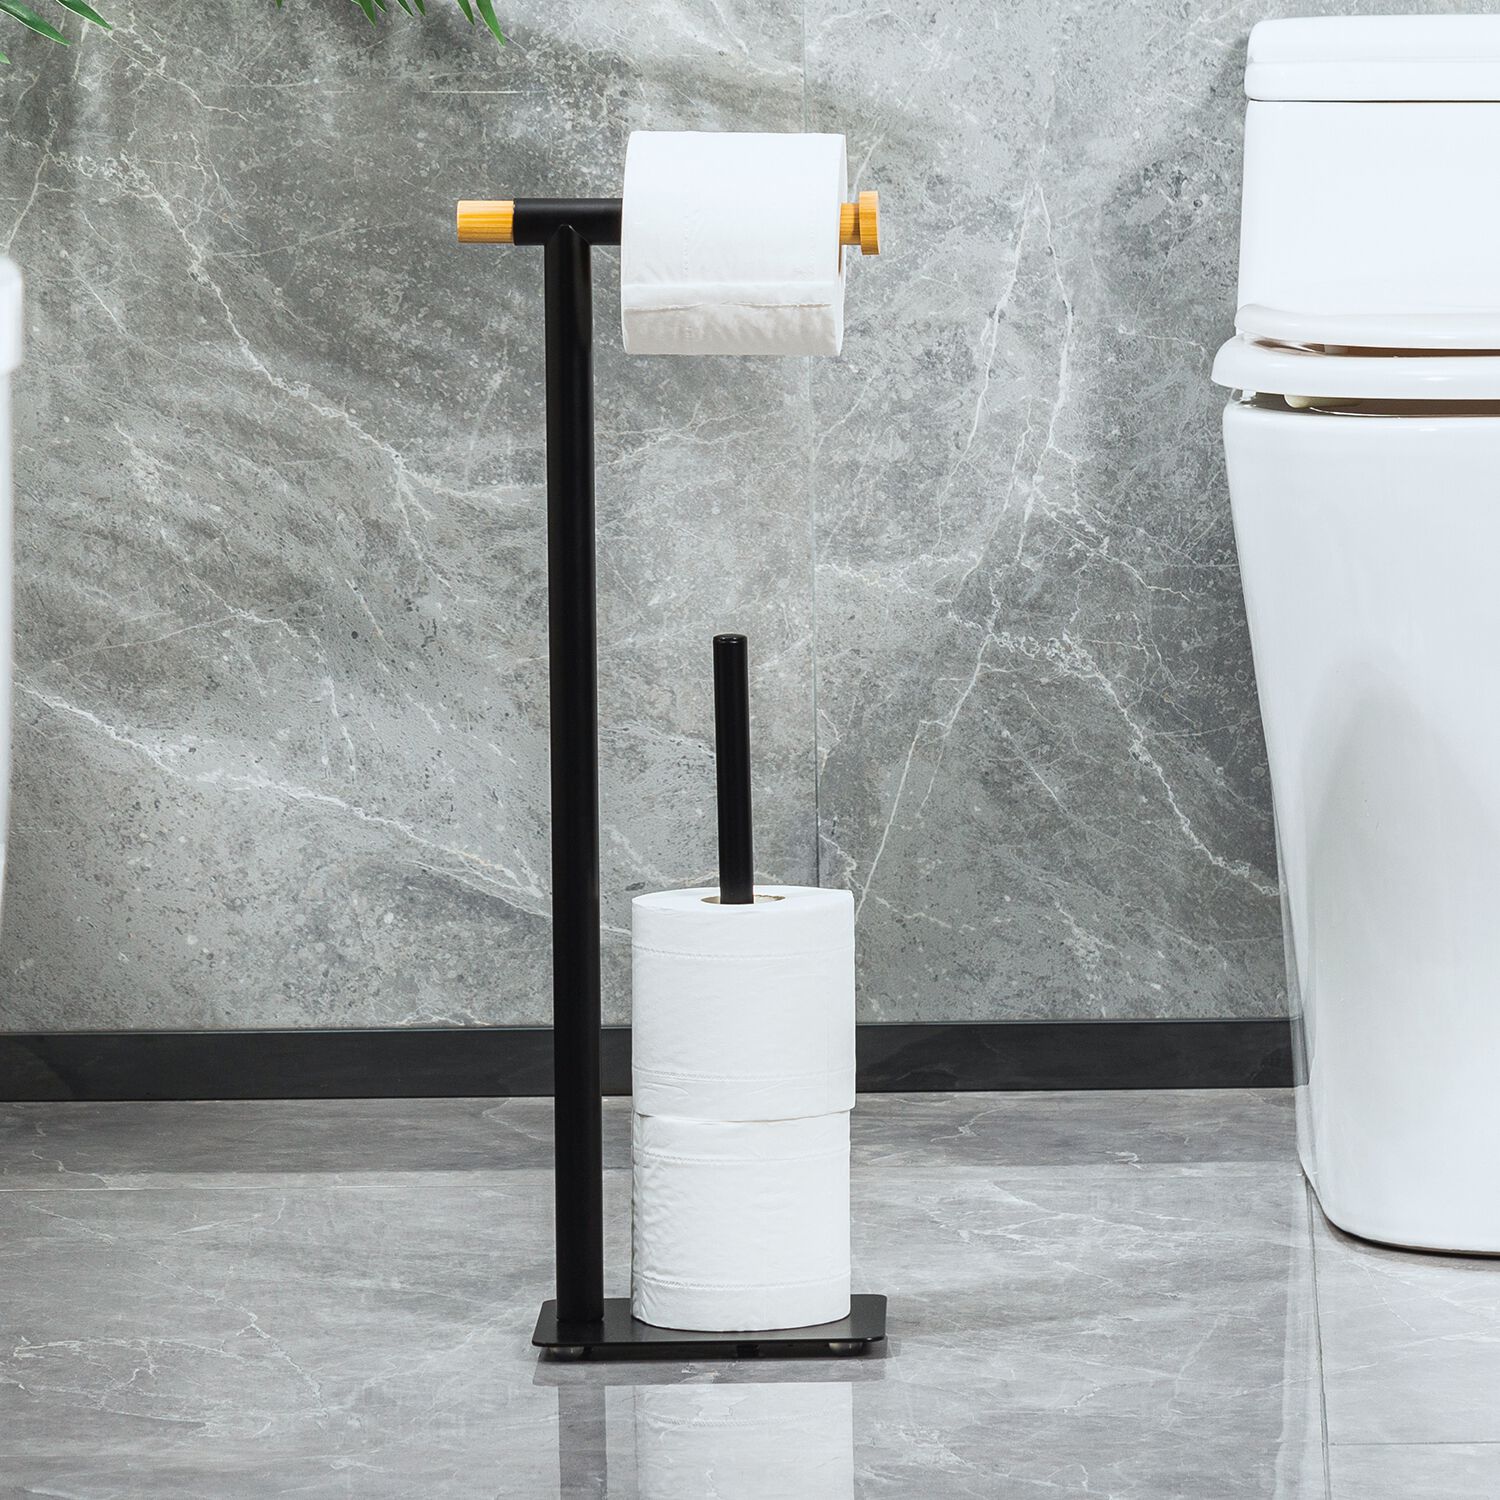 https://www.homestoreandmore.ie/dw/image/v2/BCBN_PRD/on/demandware.static/-/Sites-master/default/dwb80d6cfc/images/Freestanding-Toilet-Roll-Holder-Black-soap-dishes-toilet-roll-holders-141489-hi-res-1.jpg?sw=1500